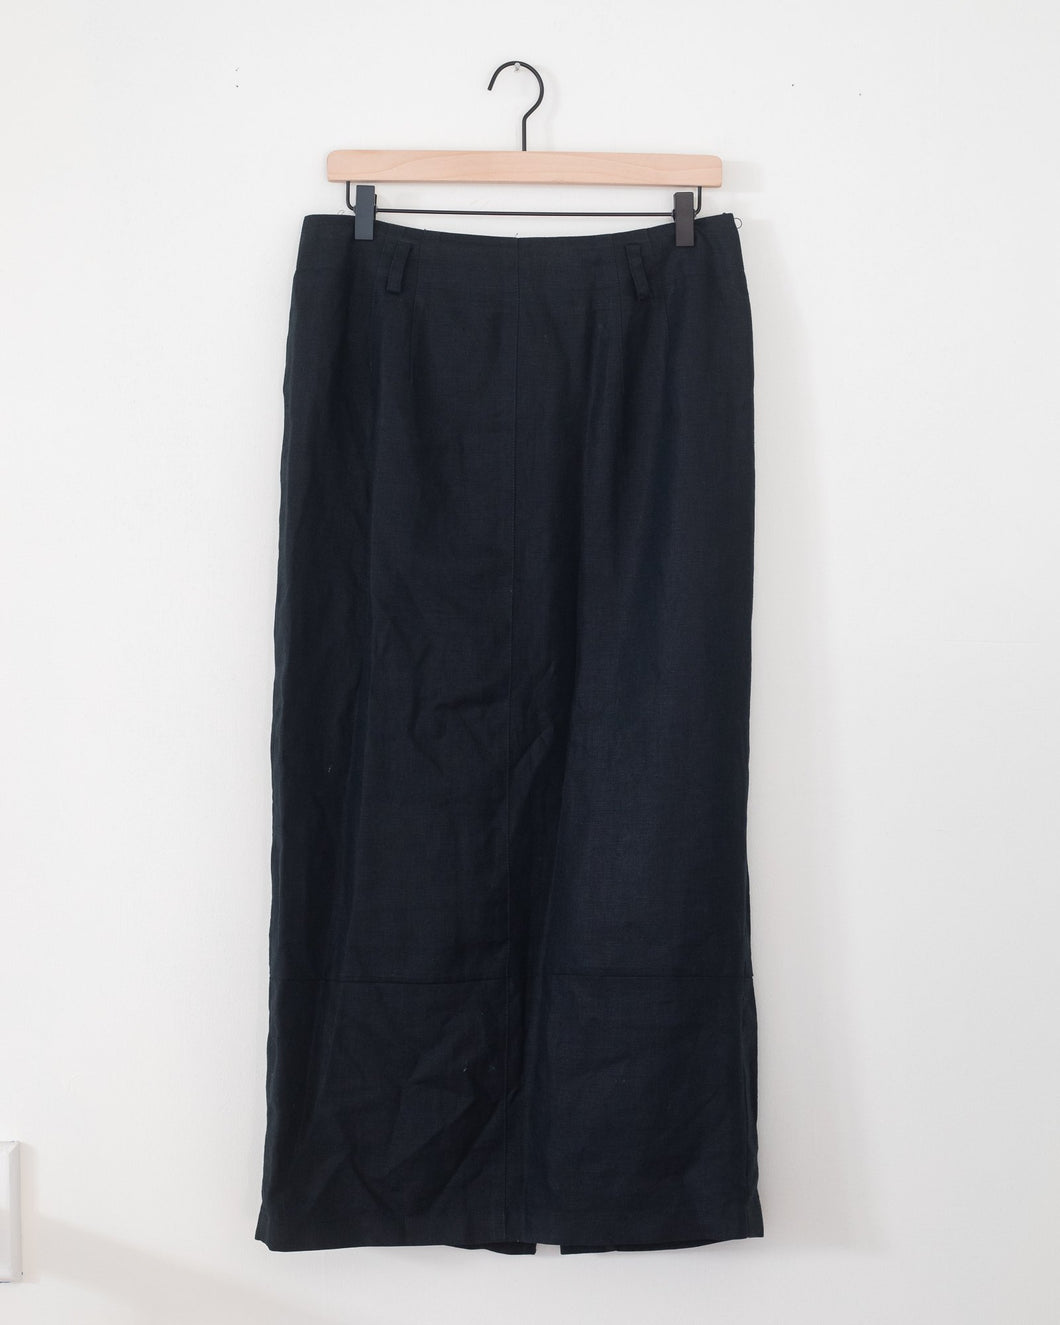 Black Linen Pencil Skirt